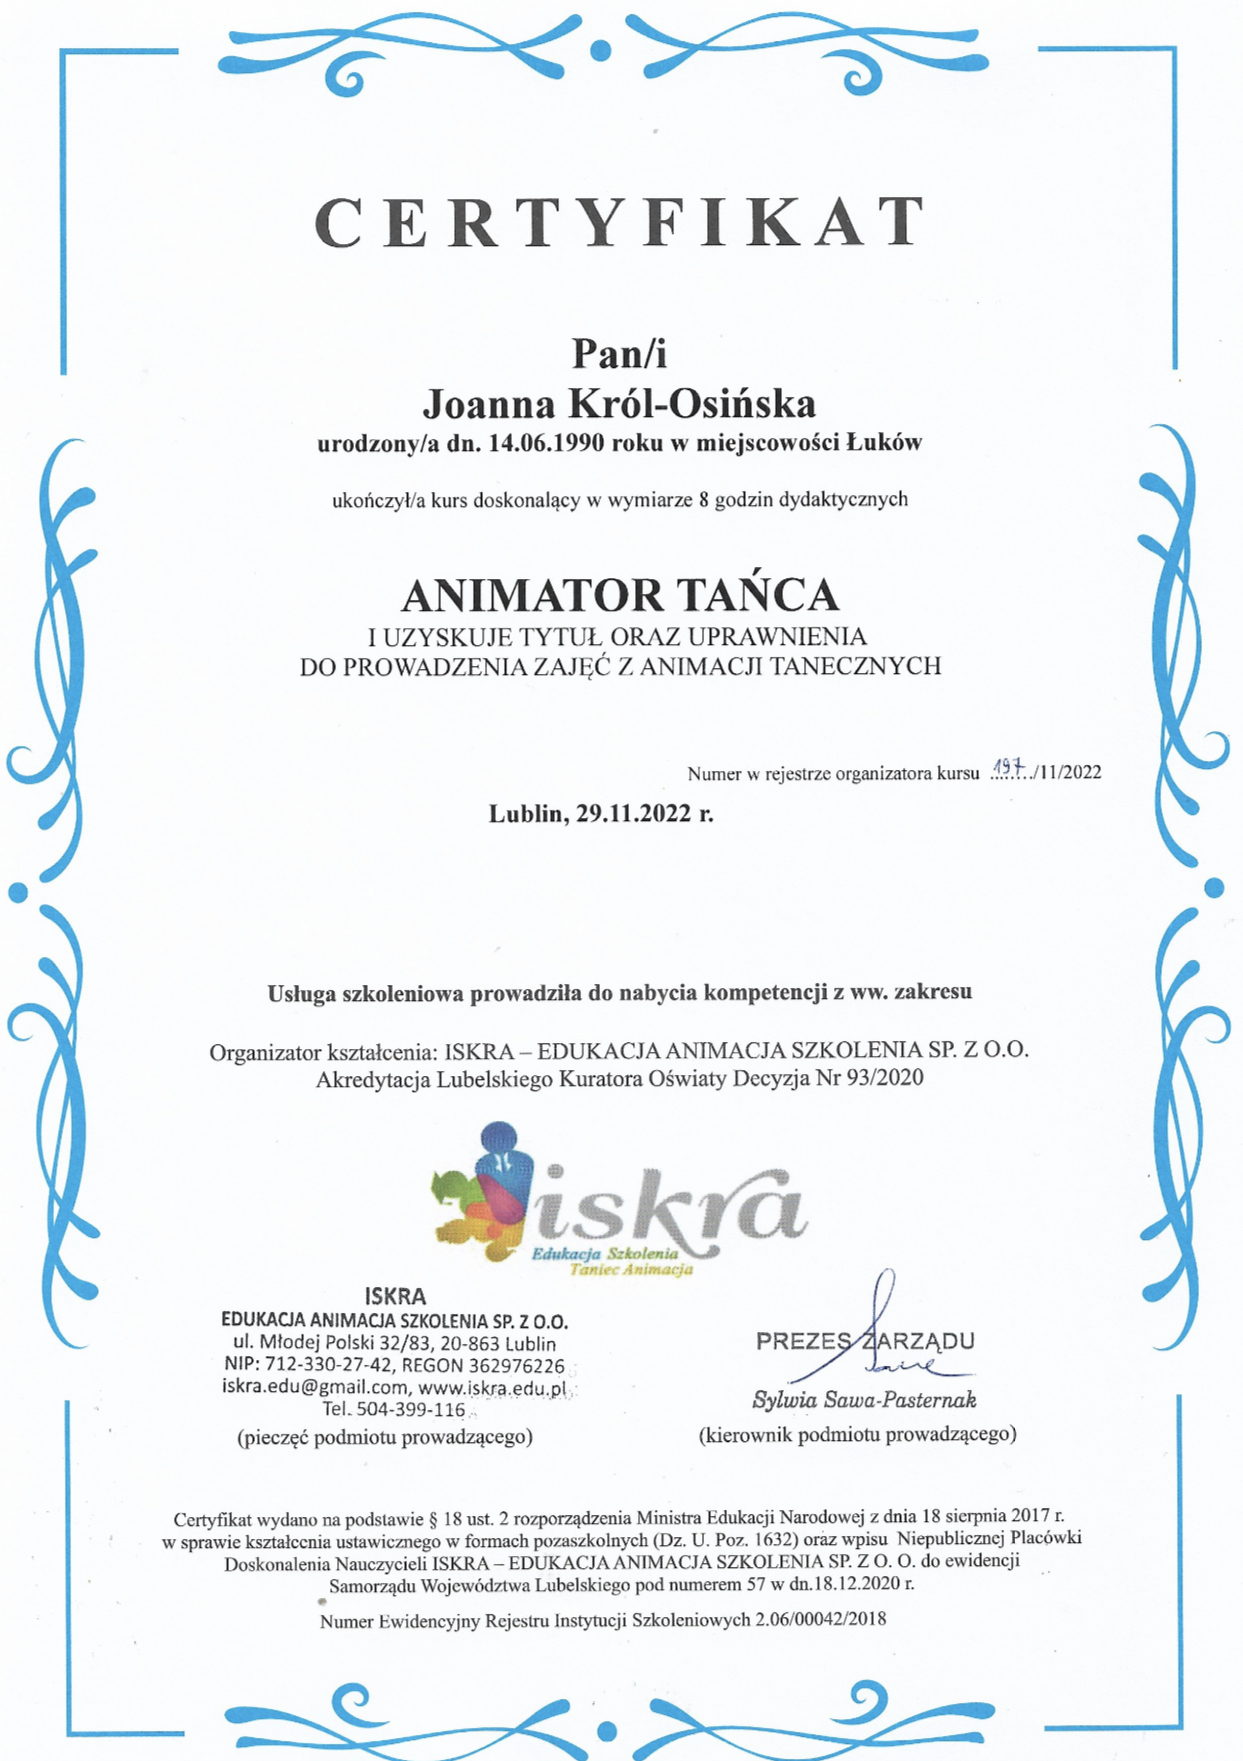 Animator tańca Joanna Król-Osińska Certyfikat